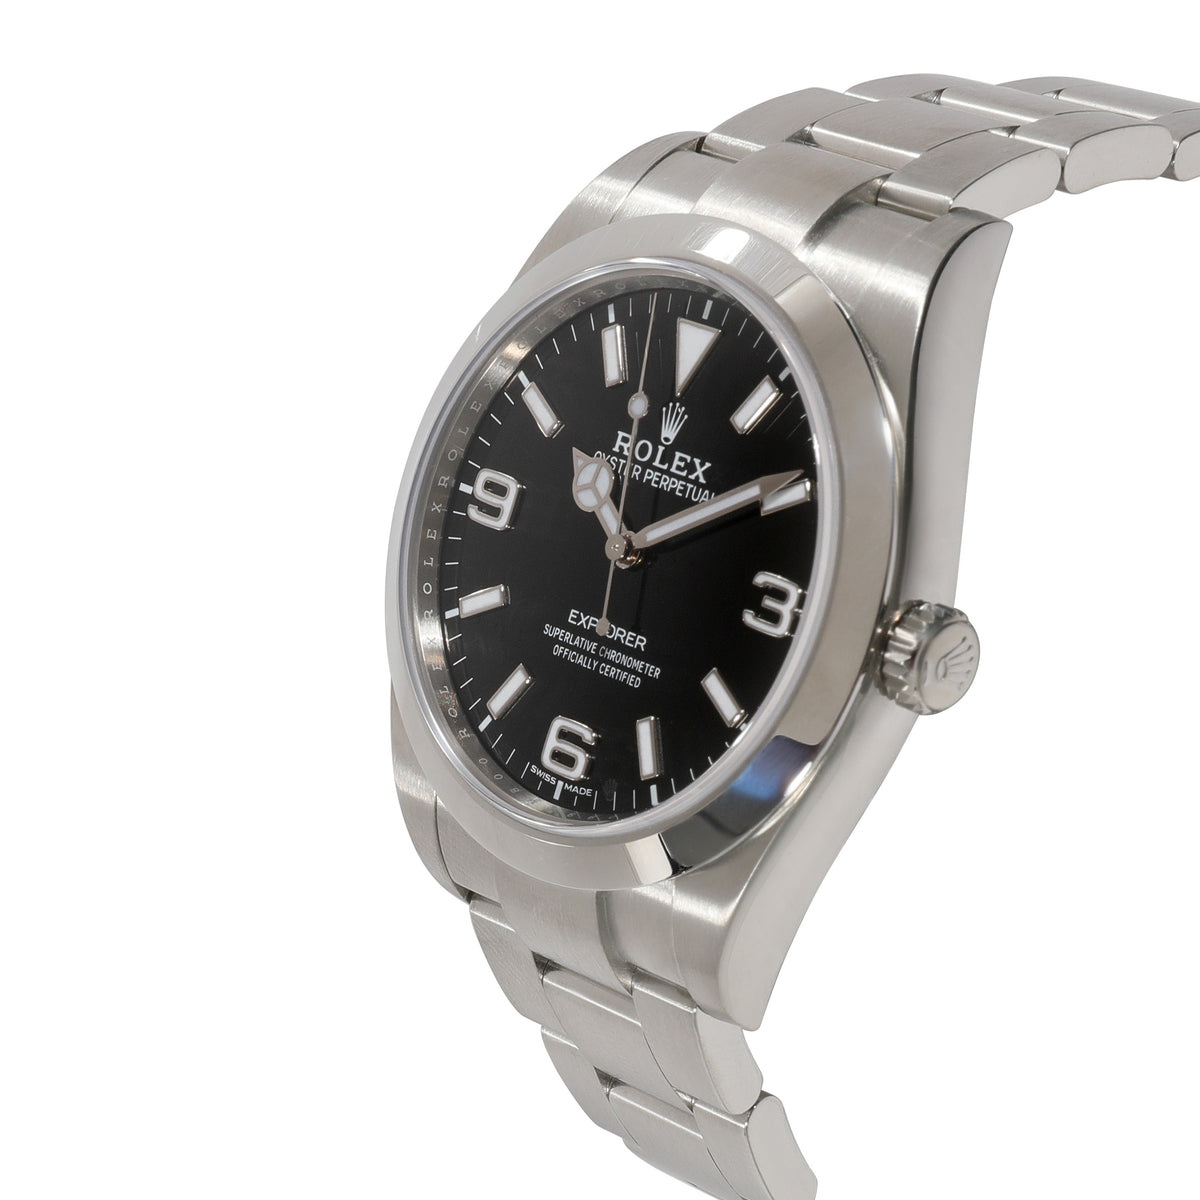 Rolex Explorer 214270 Men's Watch in  Stainless Steel